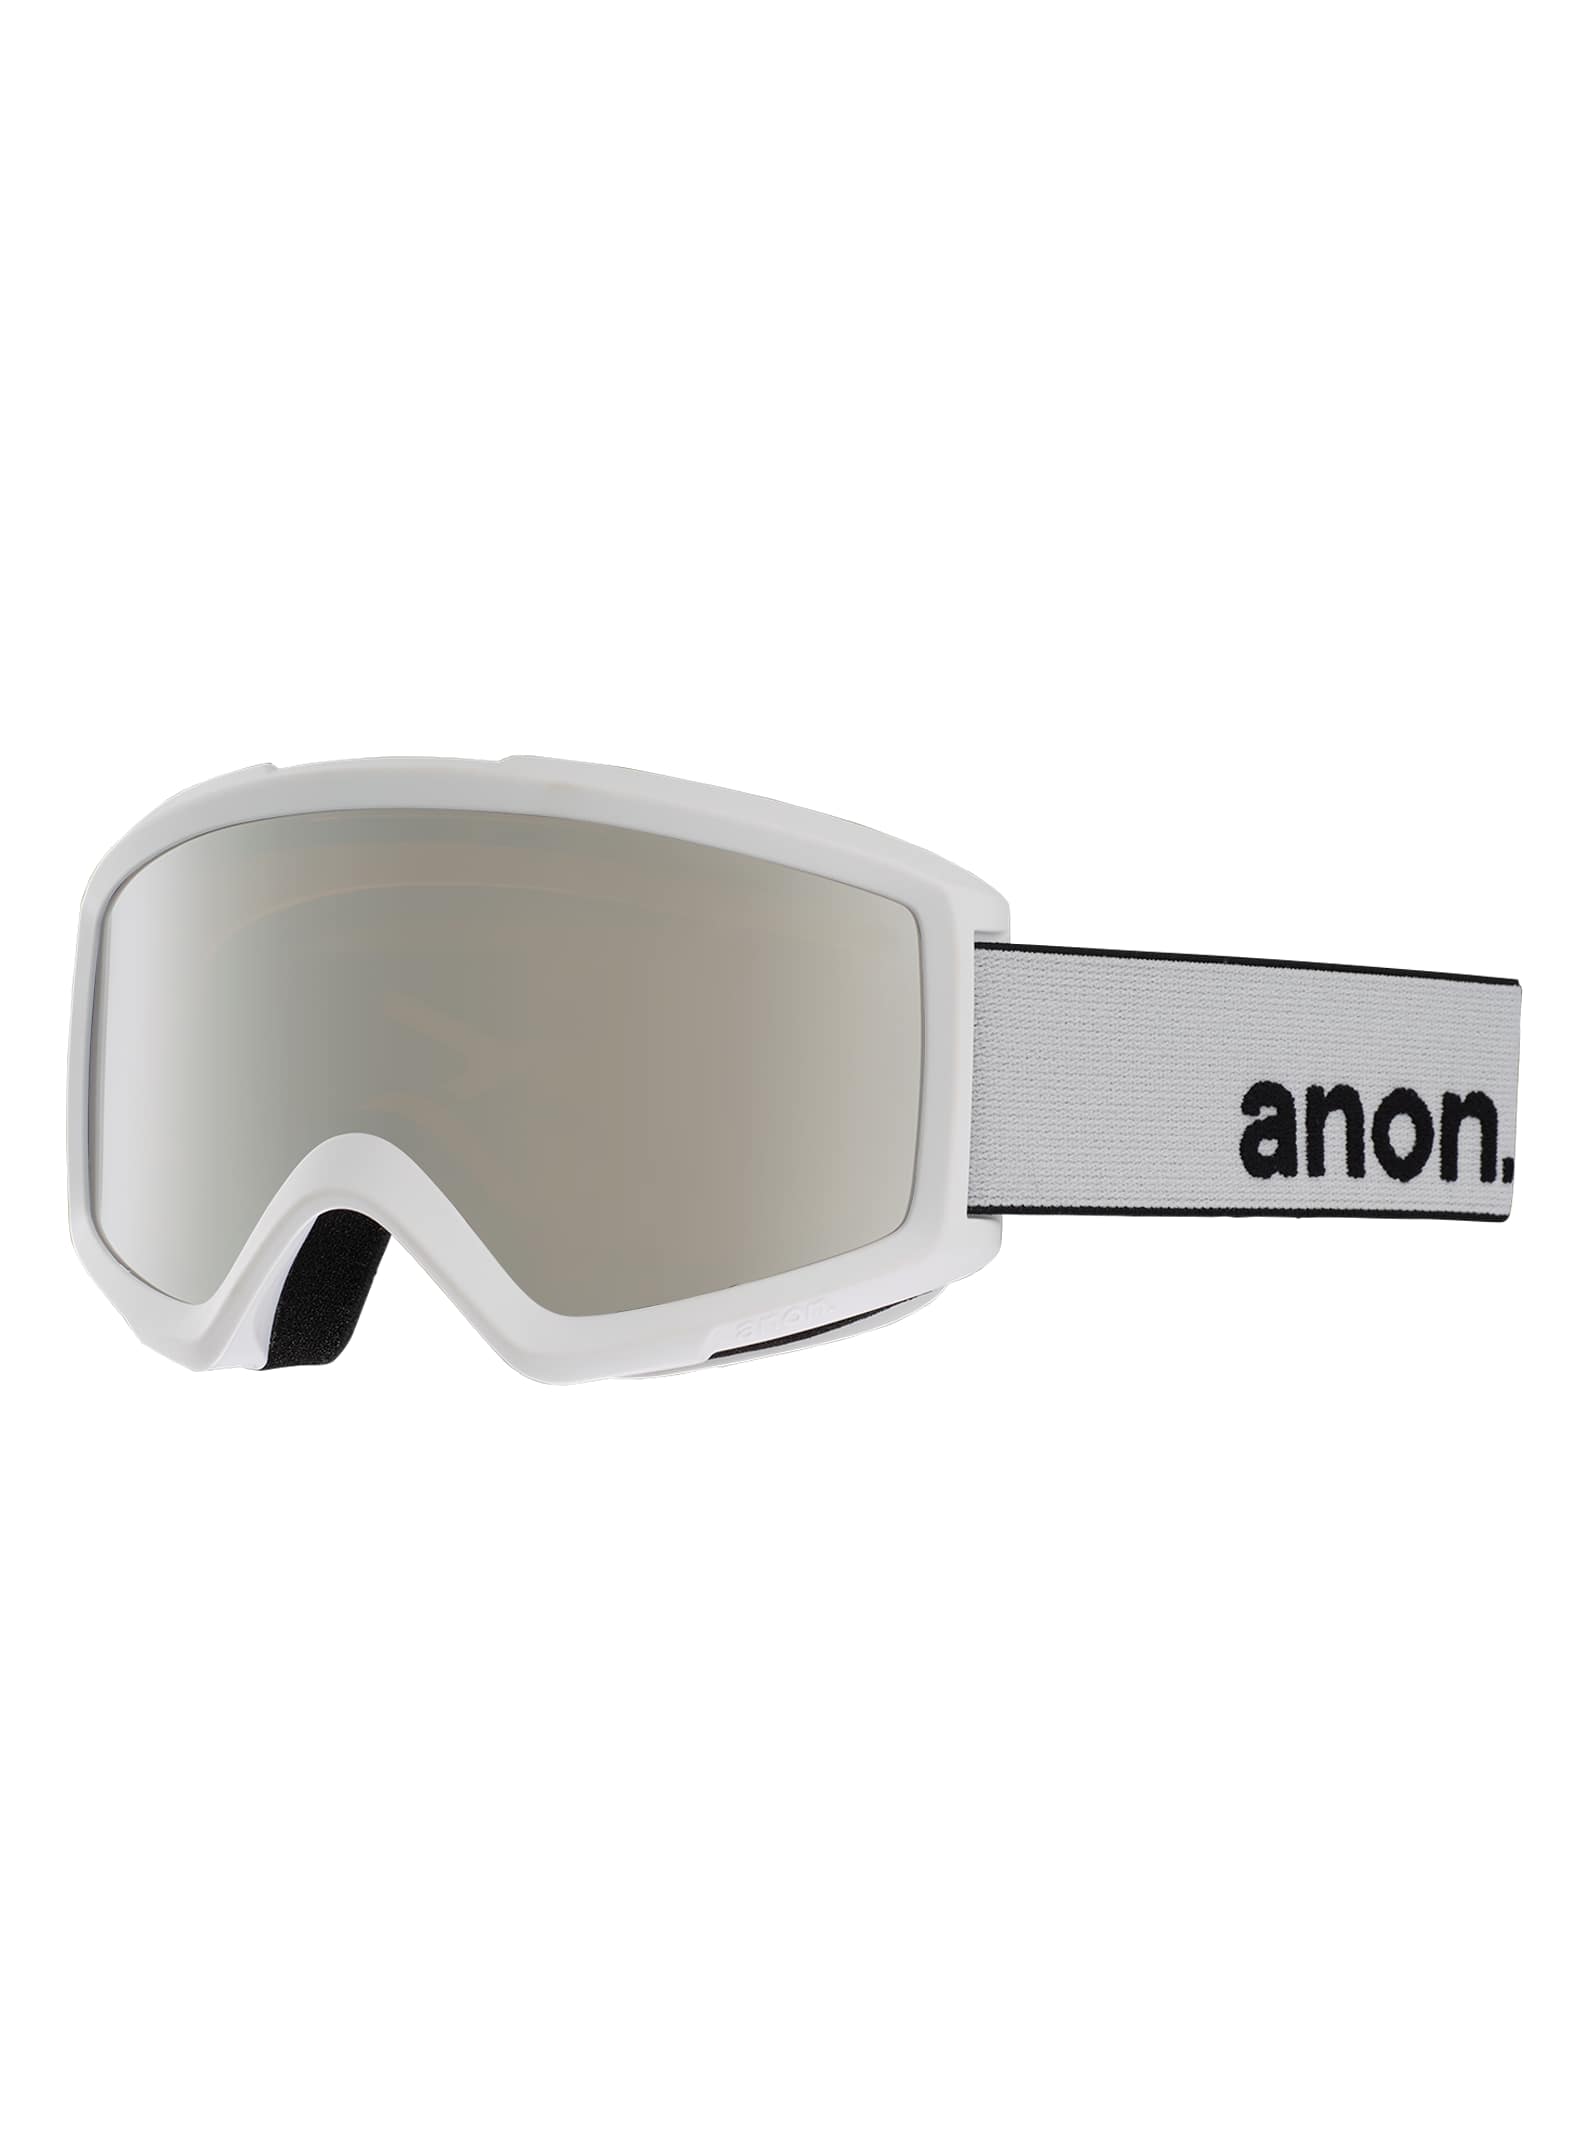 Men's Anon Helix 2.0 Sonar Goggle + Spare Lens | Burton.com Winter 2019 US